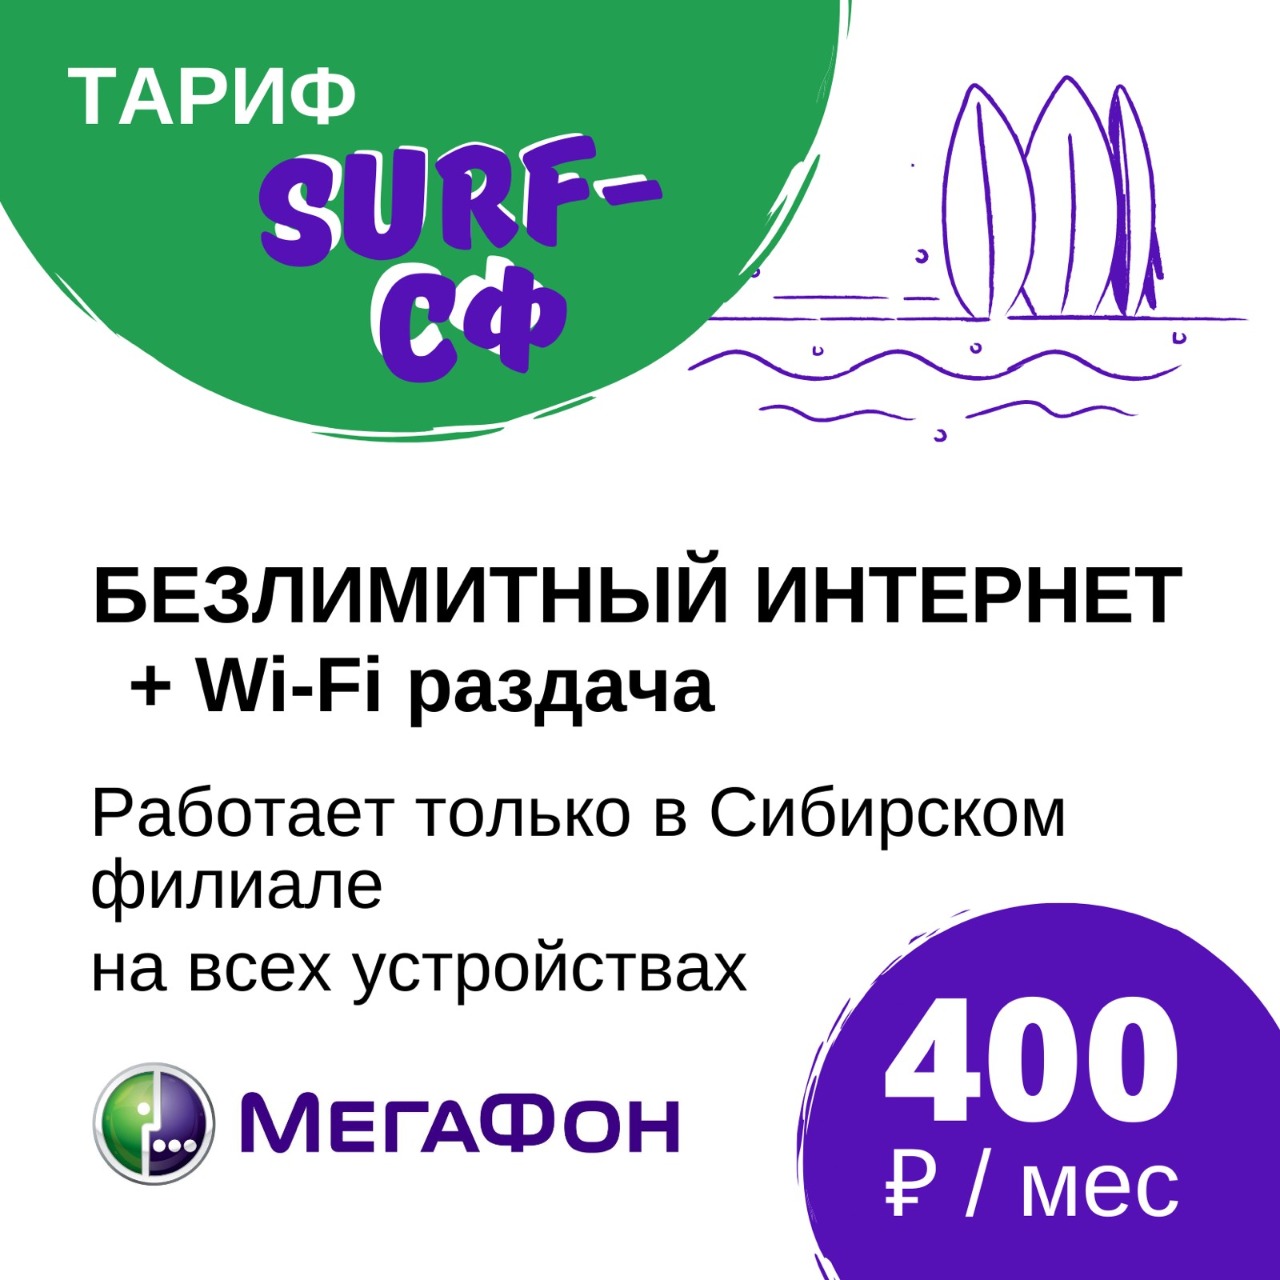 Саяногорск Инфо - whatsapp-image-2020-08-21-at-114743.jpeg, Скачано: 467